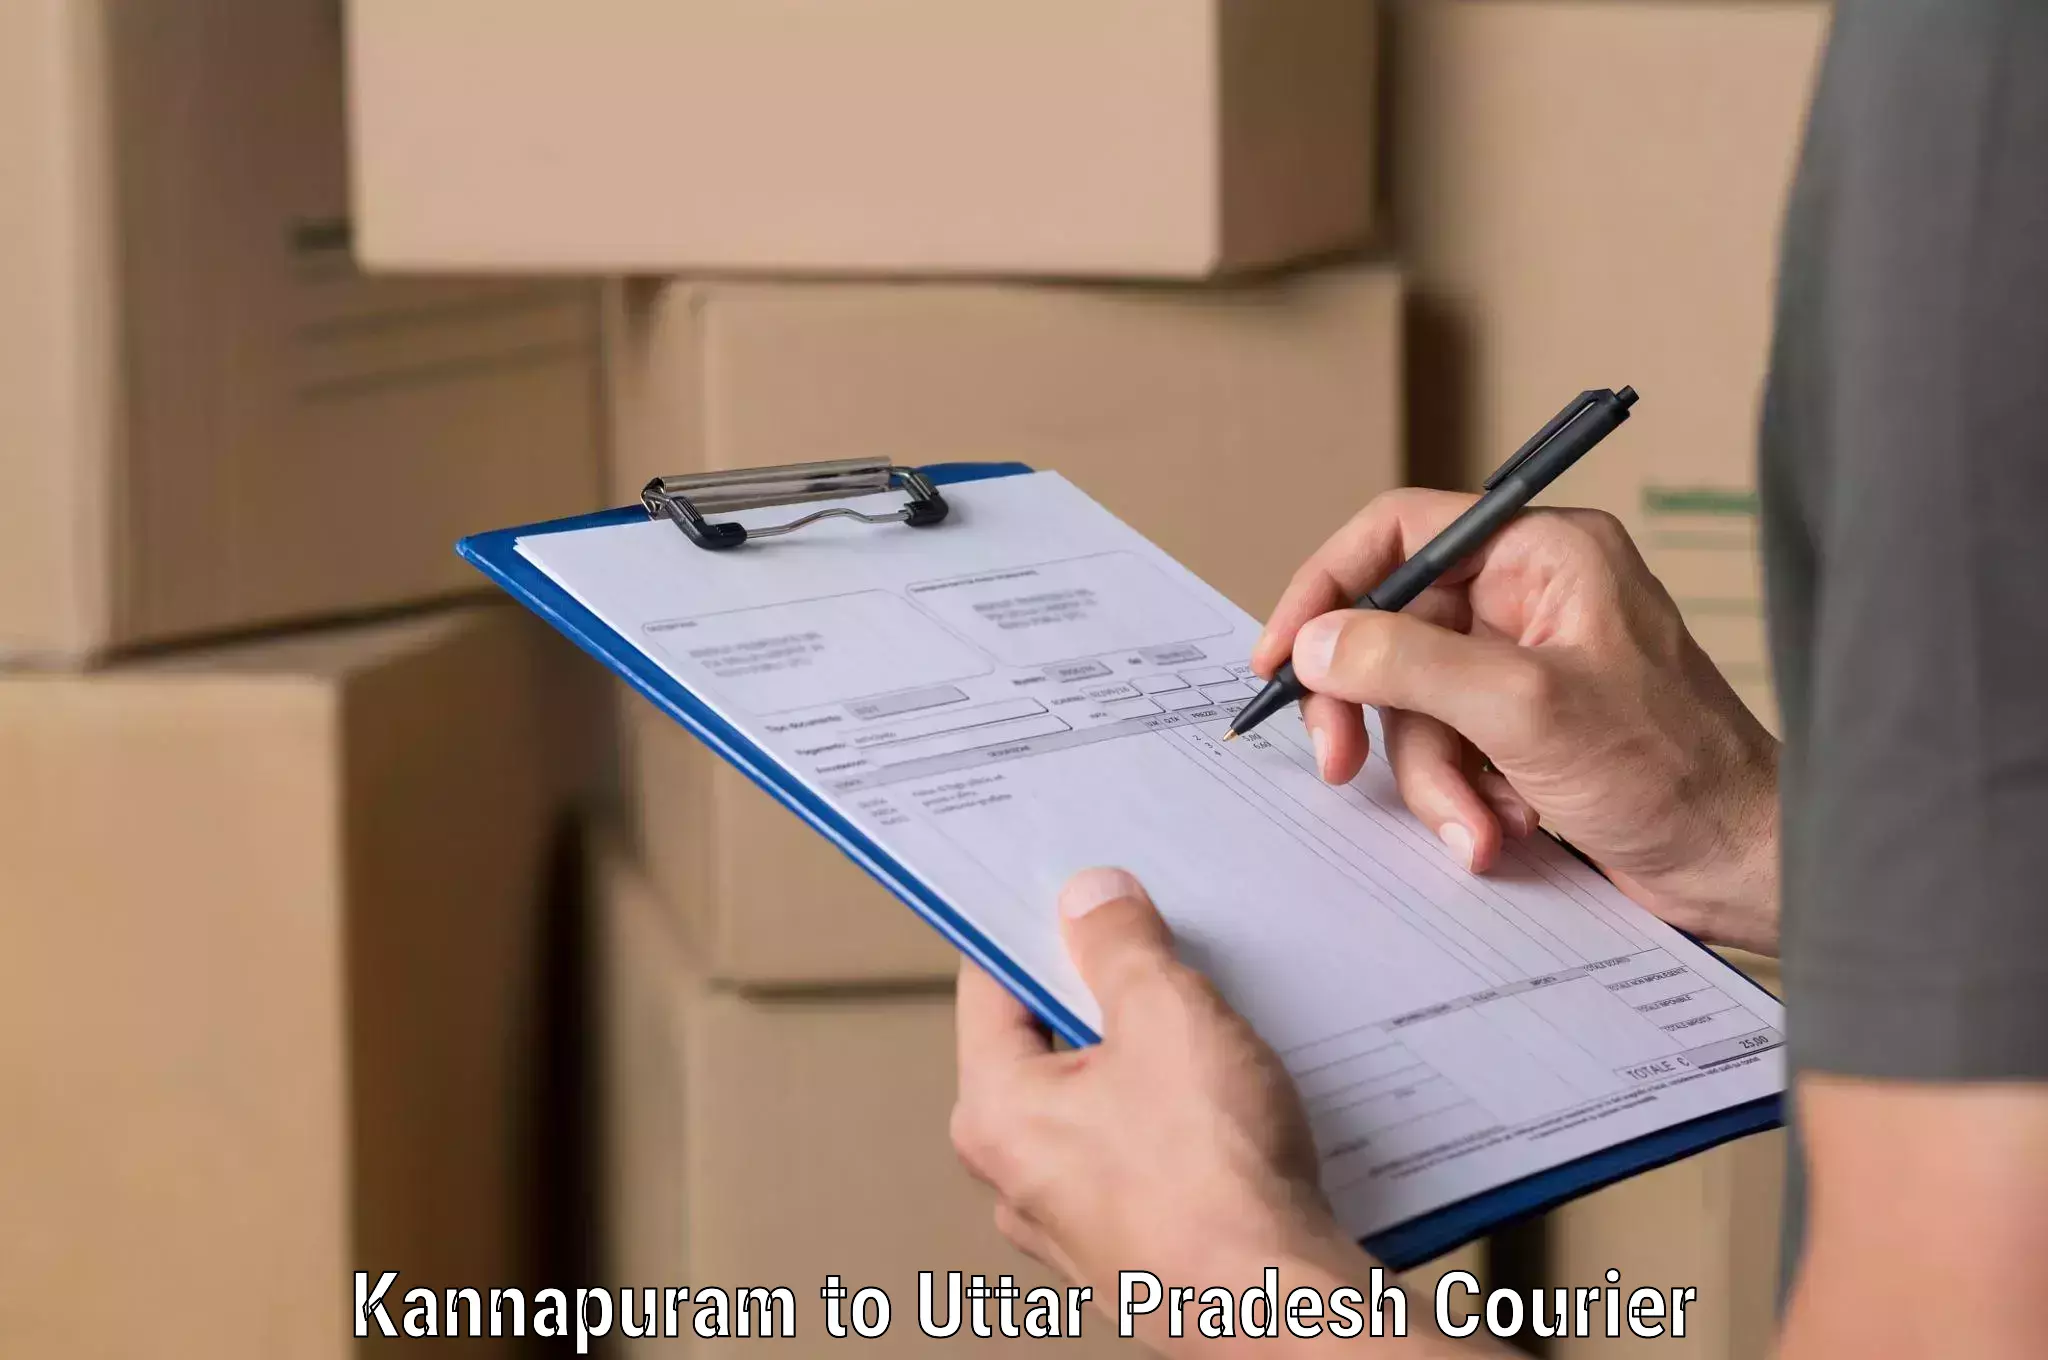 Urgent courier needs Kannapuram to Bighapur